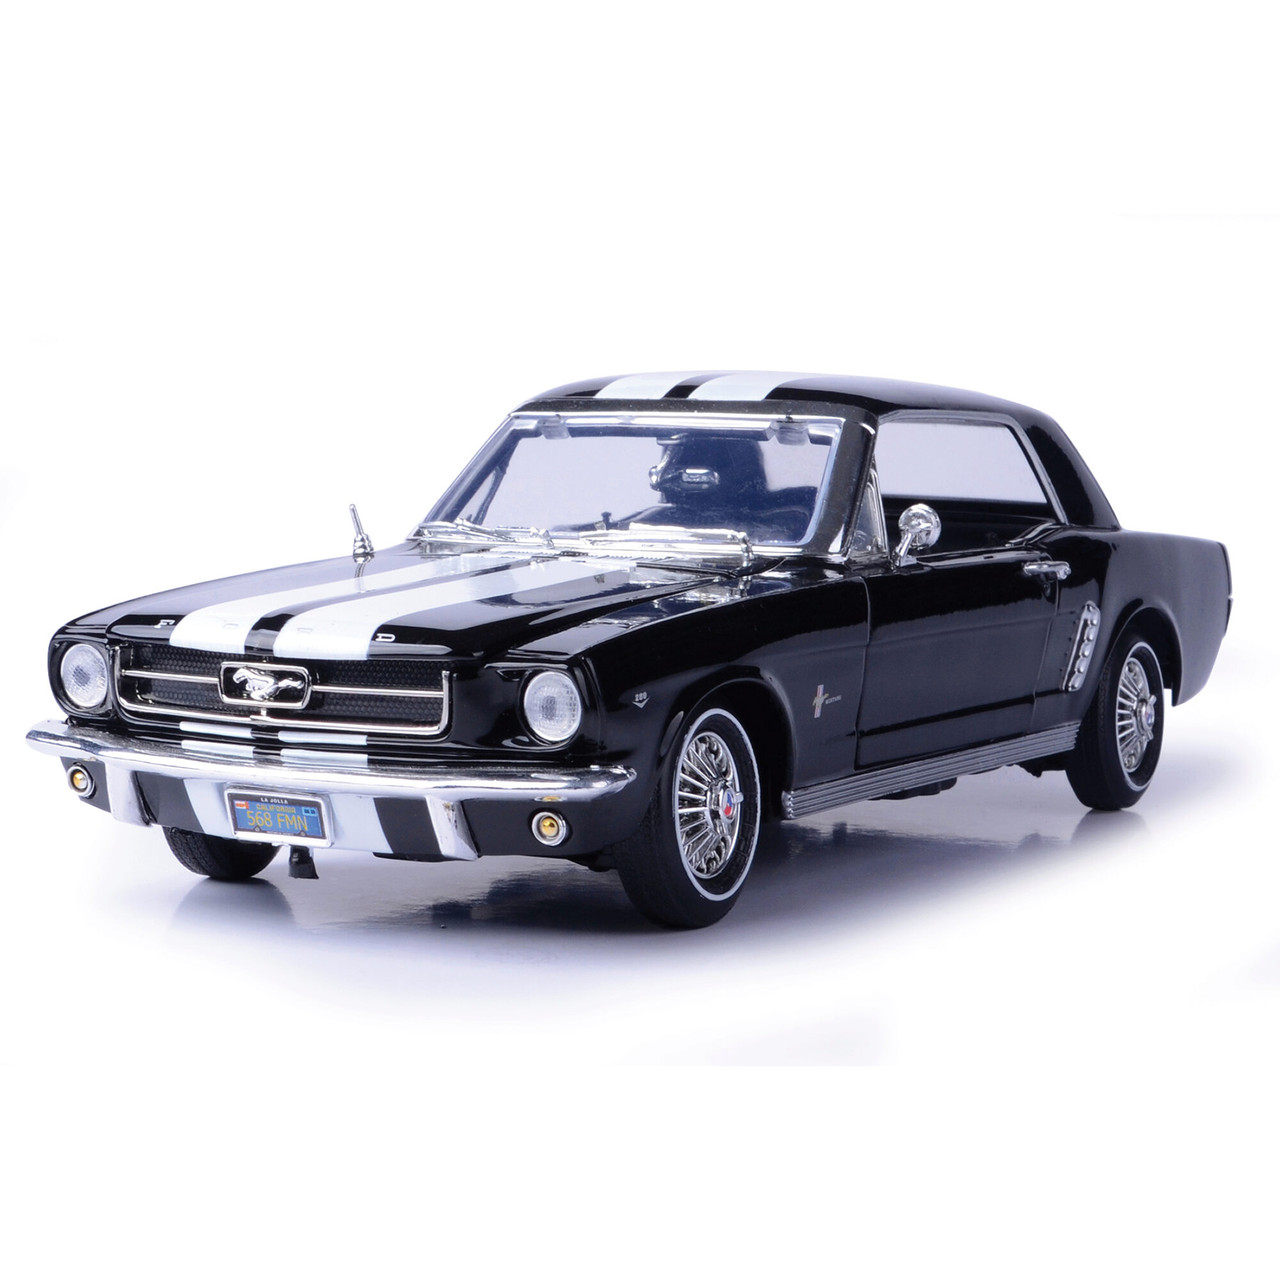 1964 1/2 Mustang Hardtop 1:18 Scale Diecast Model Car by Motormax